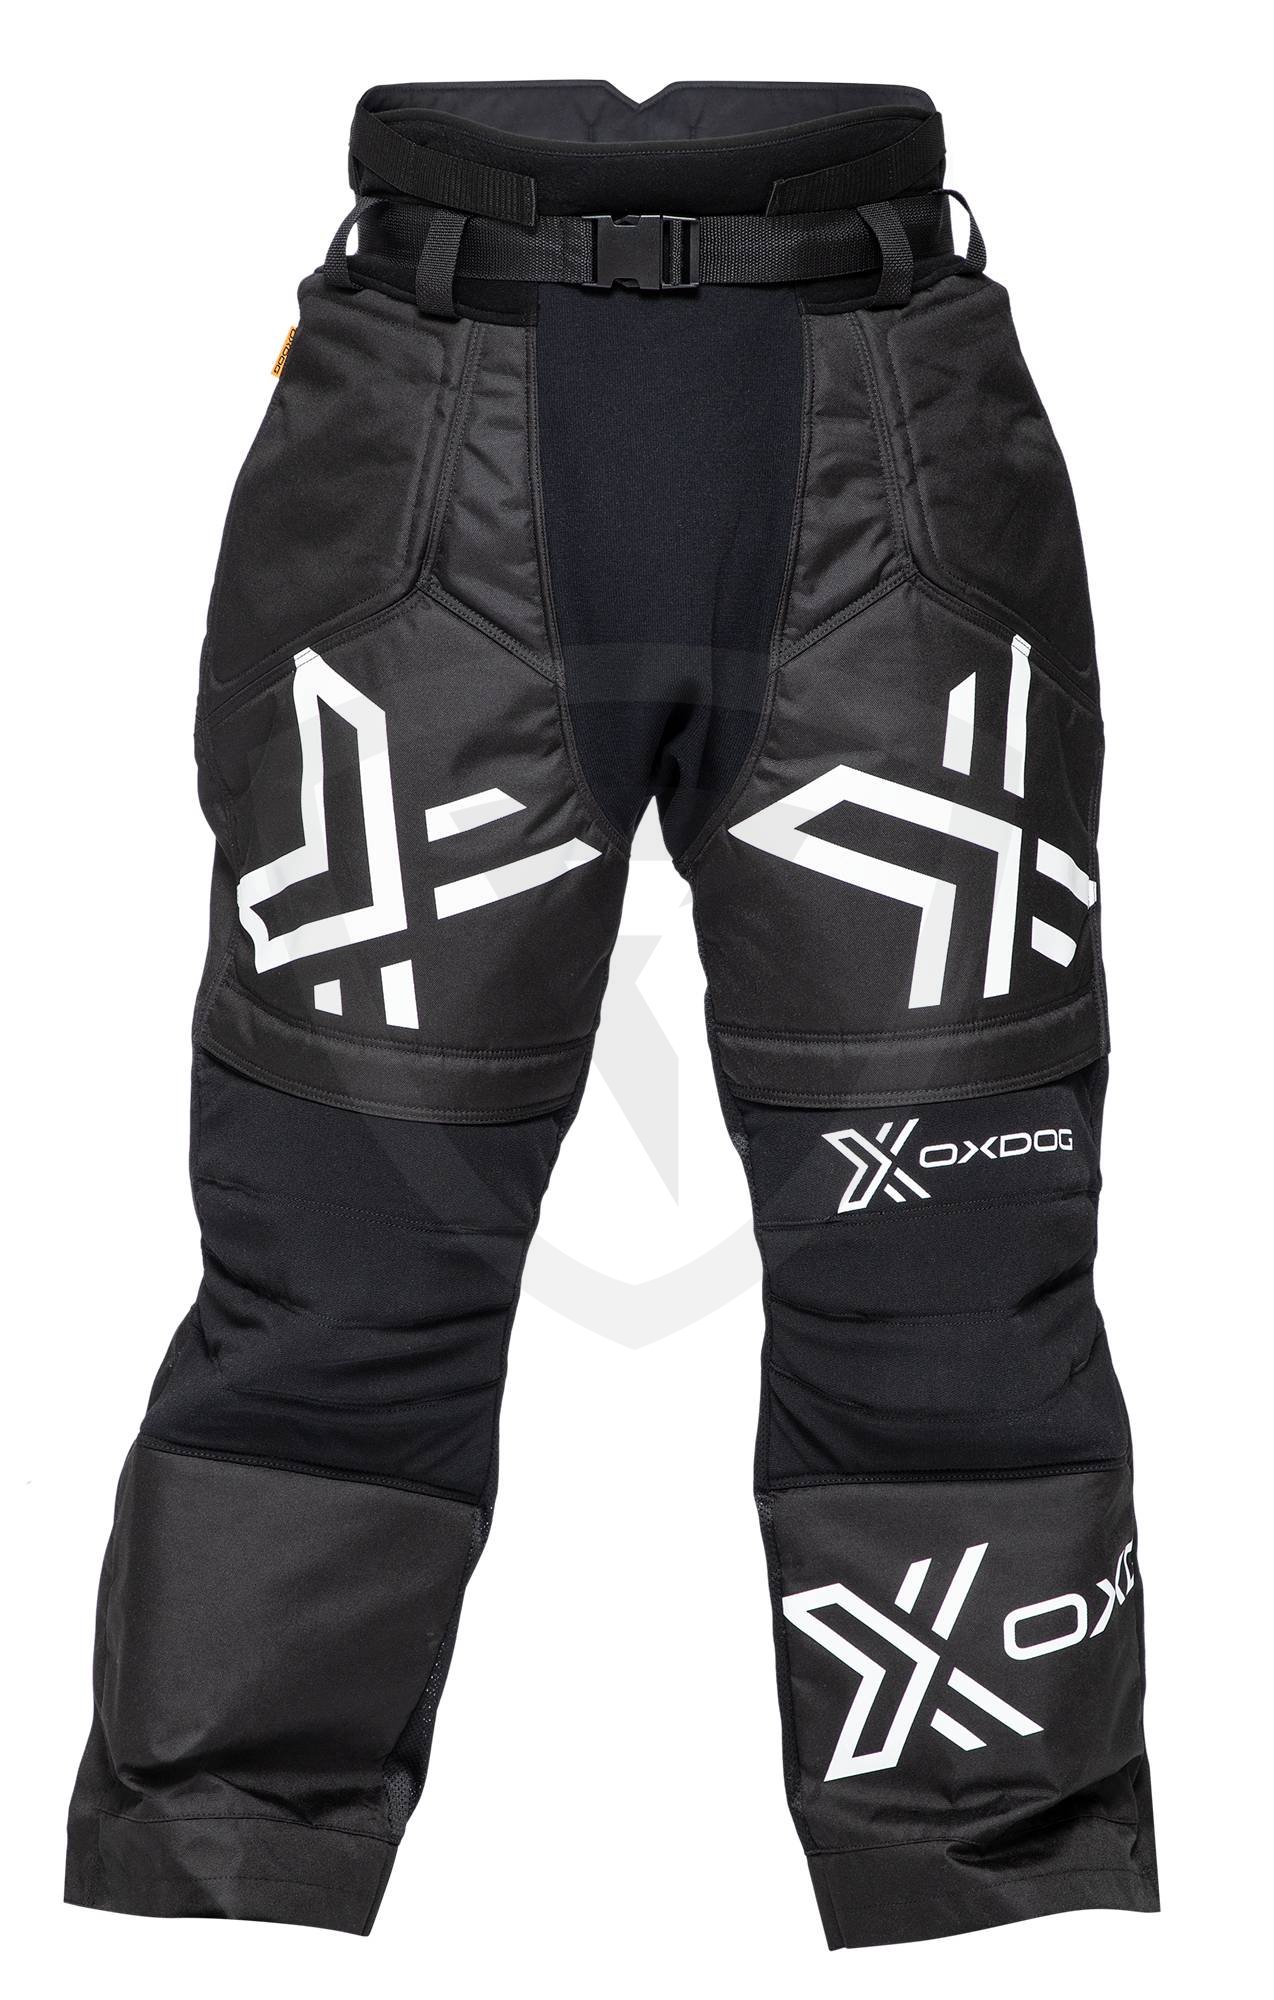 Oxdog Xguard Goalie Pants Black-White XXL